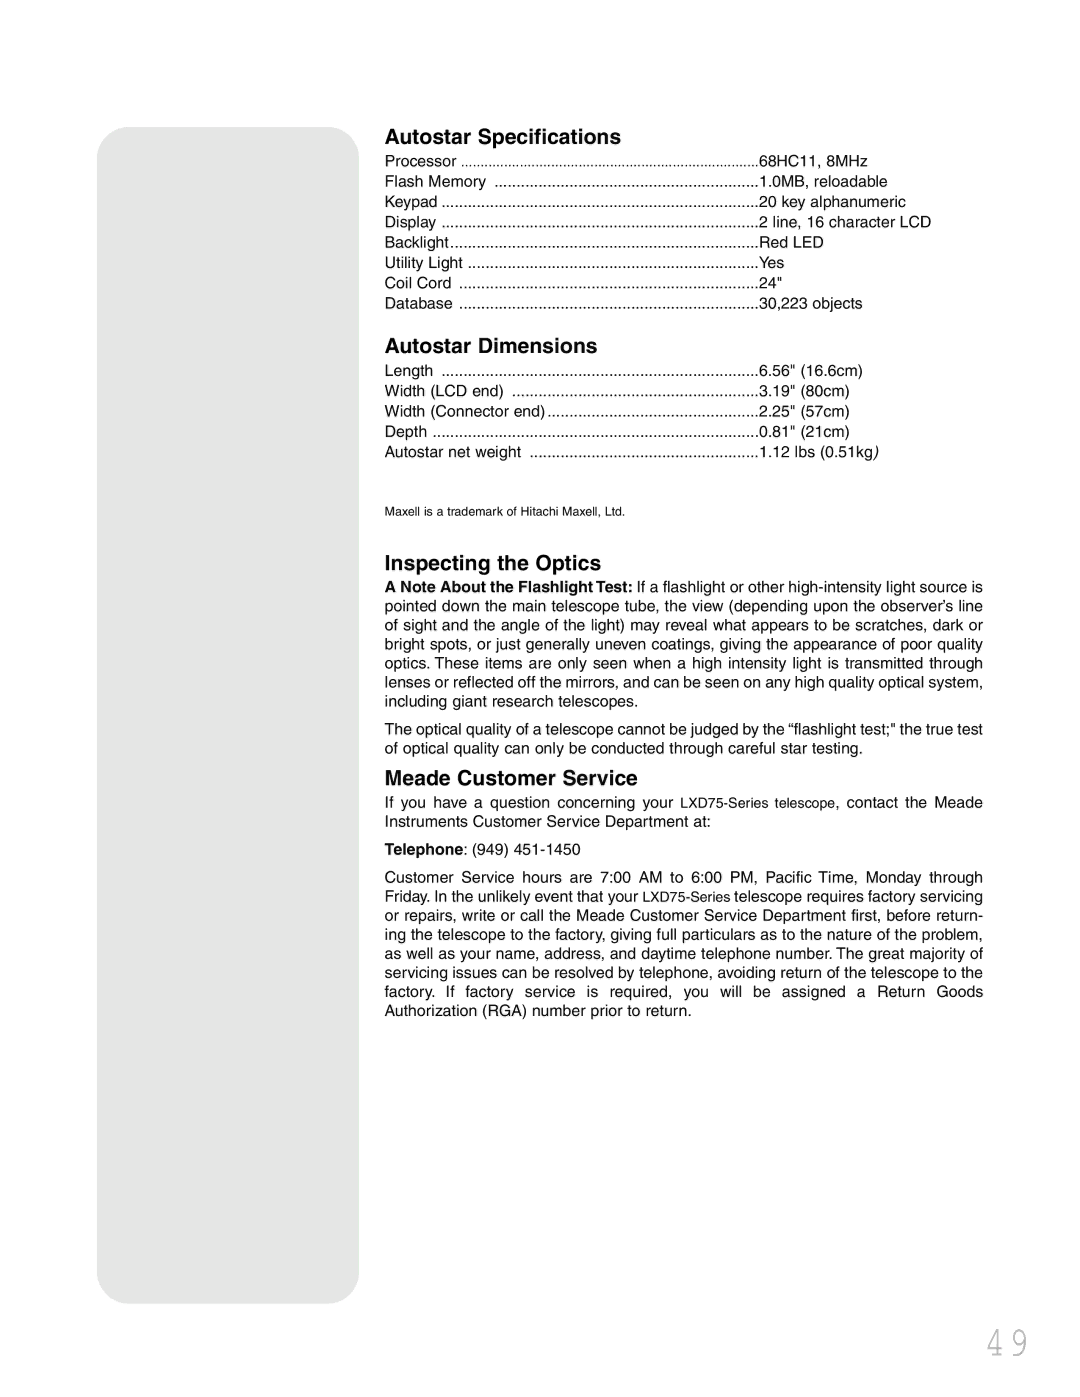 Meade LXD 75 instruction manual Autostar Specifications, Autostar Dimensions, Inspecting the Optics, Meade Customer Service 